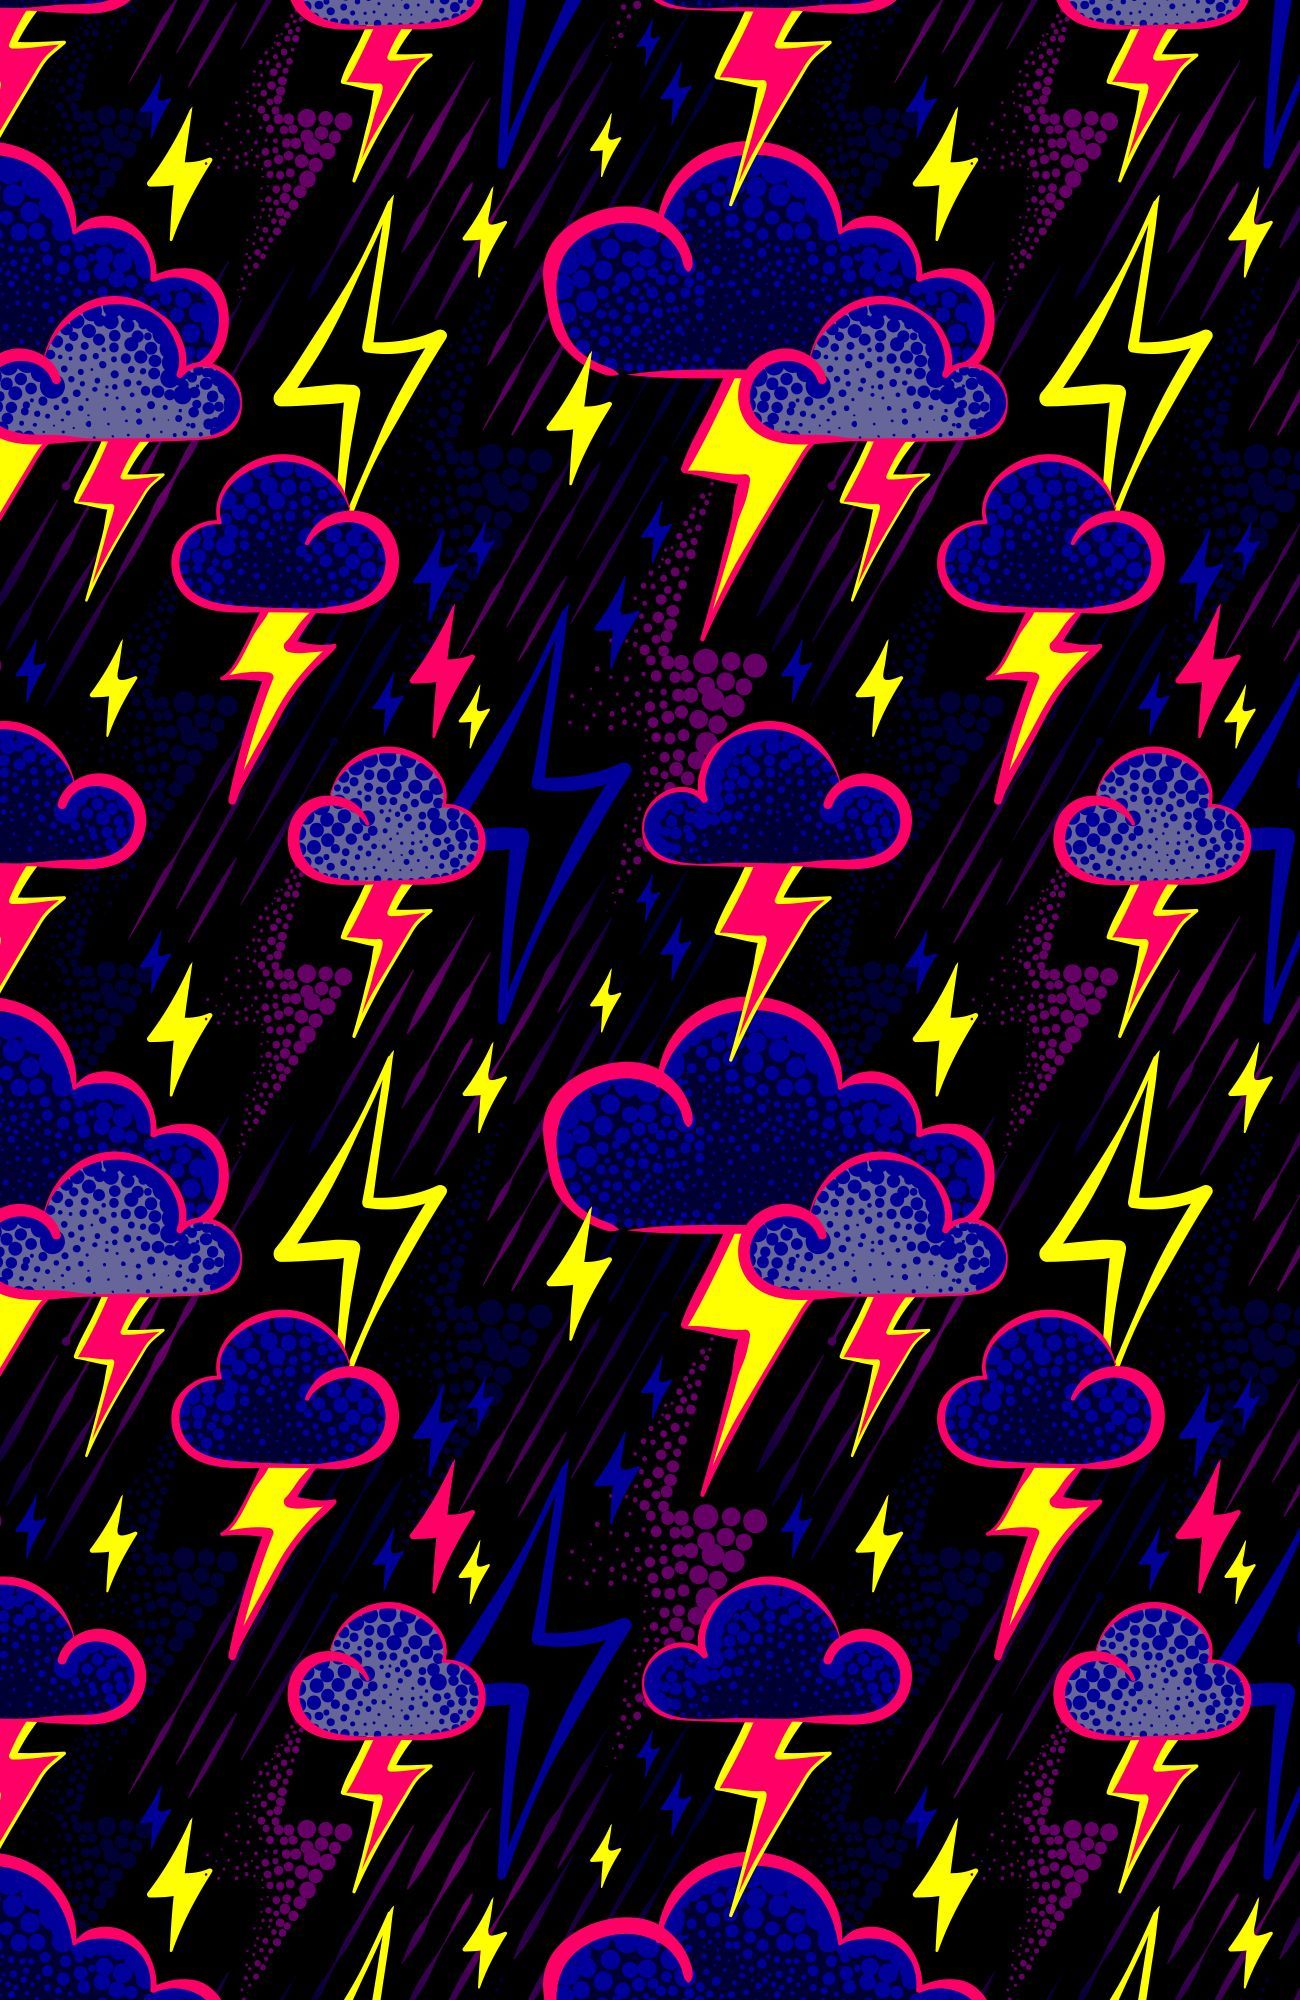 Lightning bolt storm clouds pattern print repeat fabric